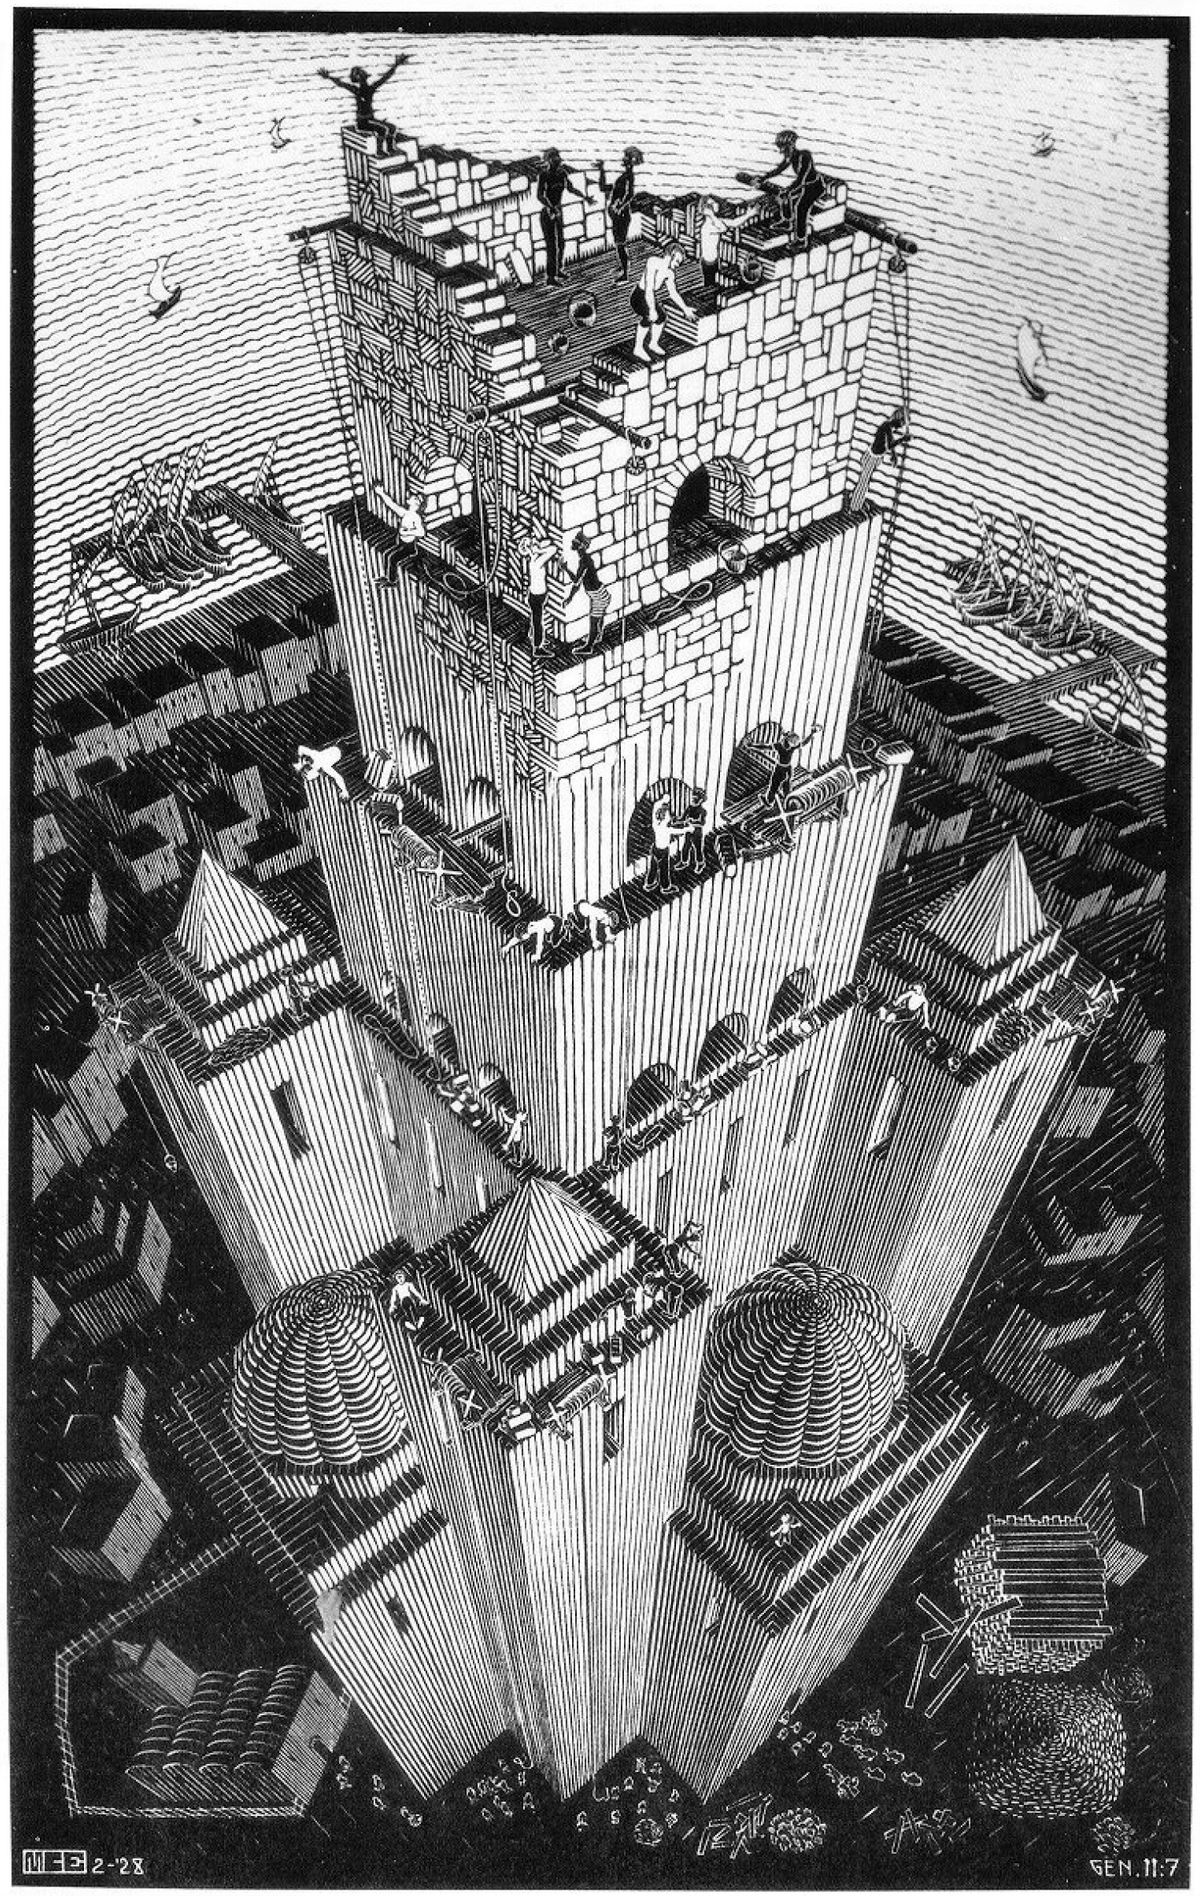 M.C. Escher's Tower of Babel (1928)